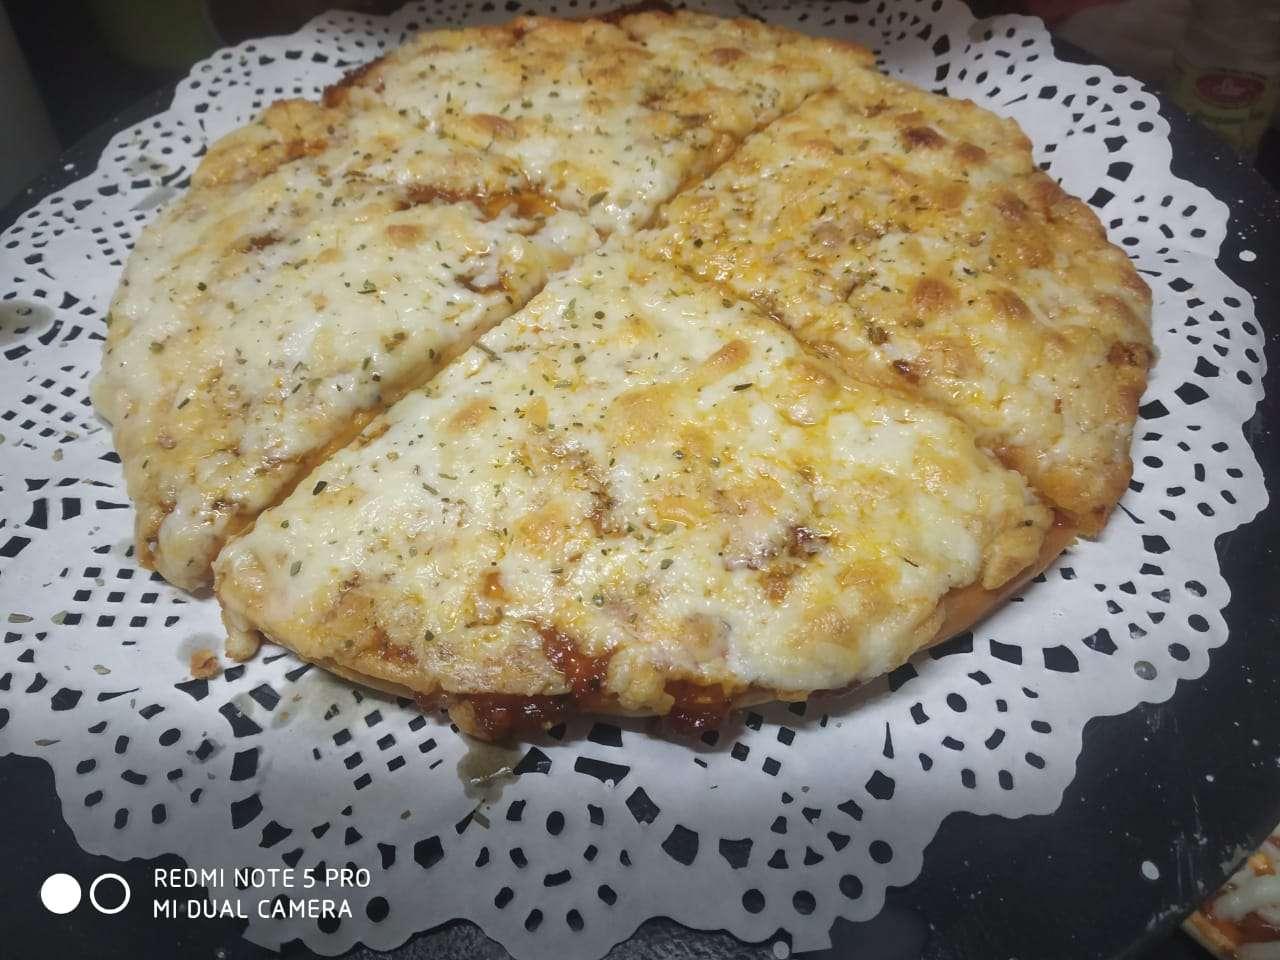 Delicious Margherita Pizza prepared by COOX